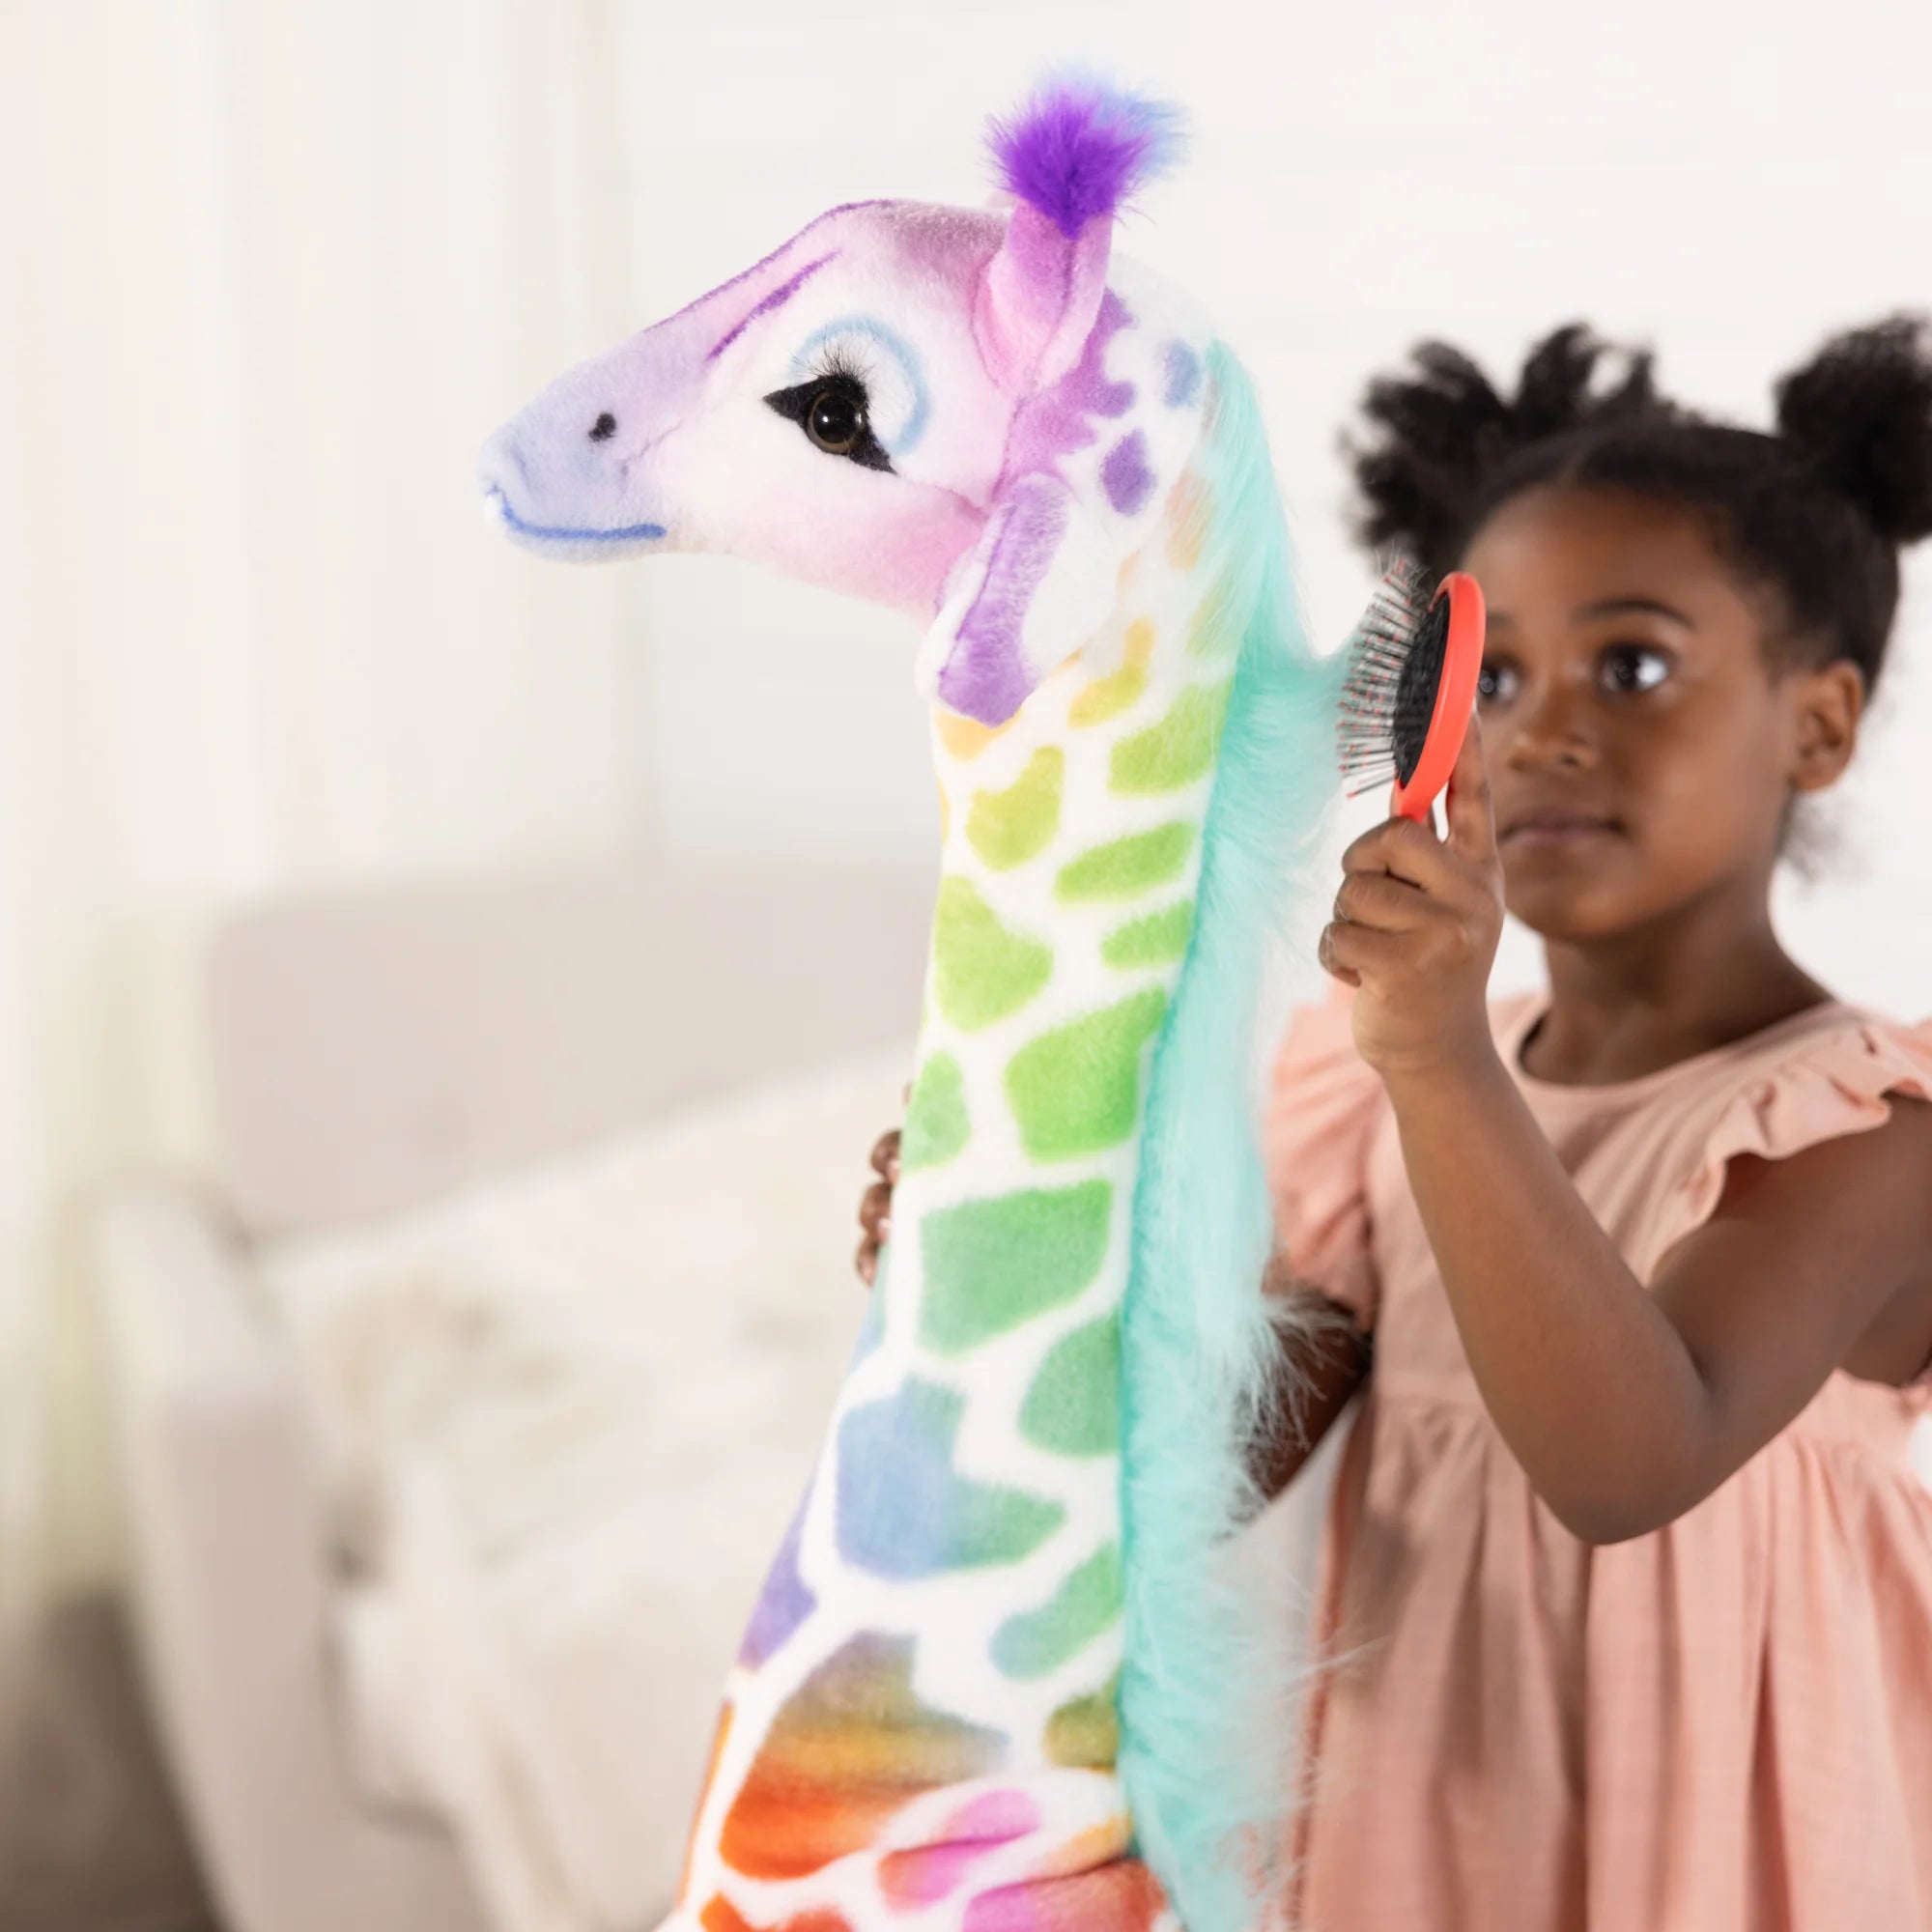 Melissa & Doug-Rainbow Giraffe - Lifelike Animal Giant Plush-32203-Legacy Toys